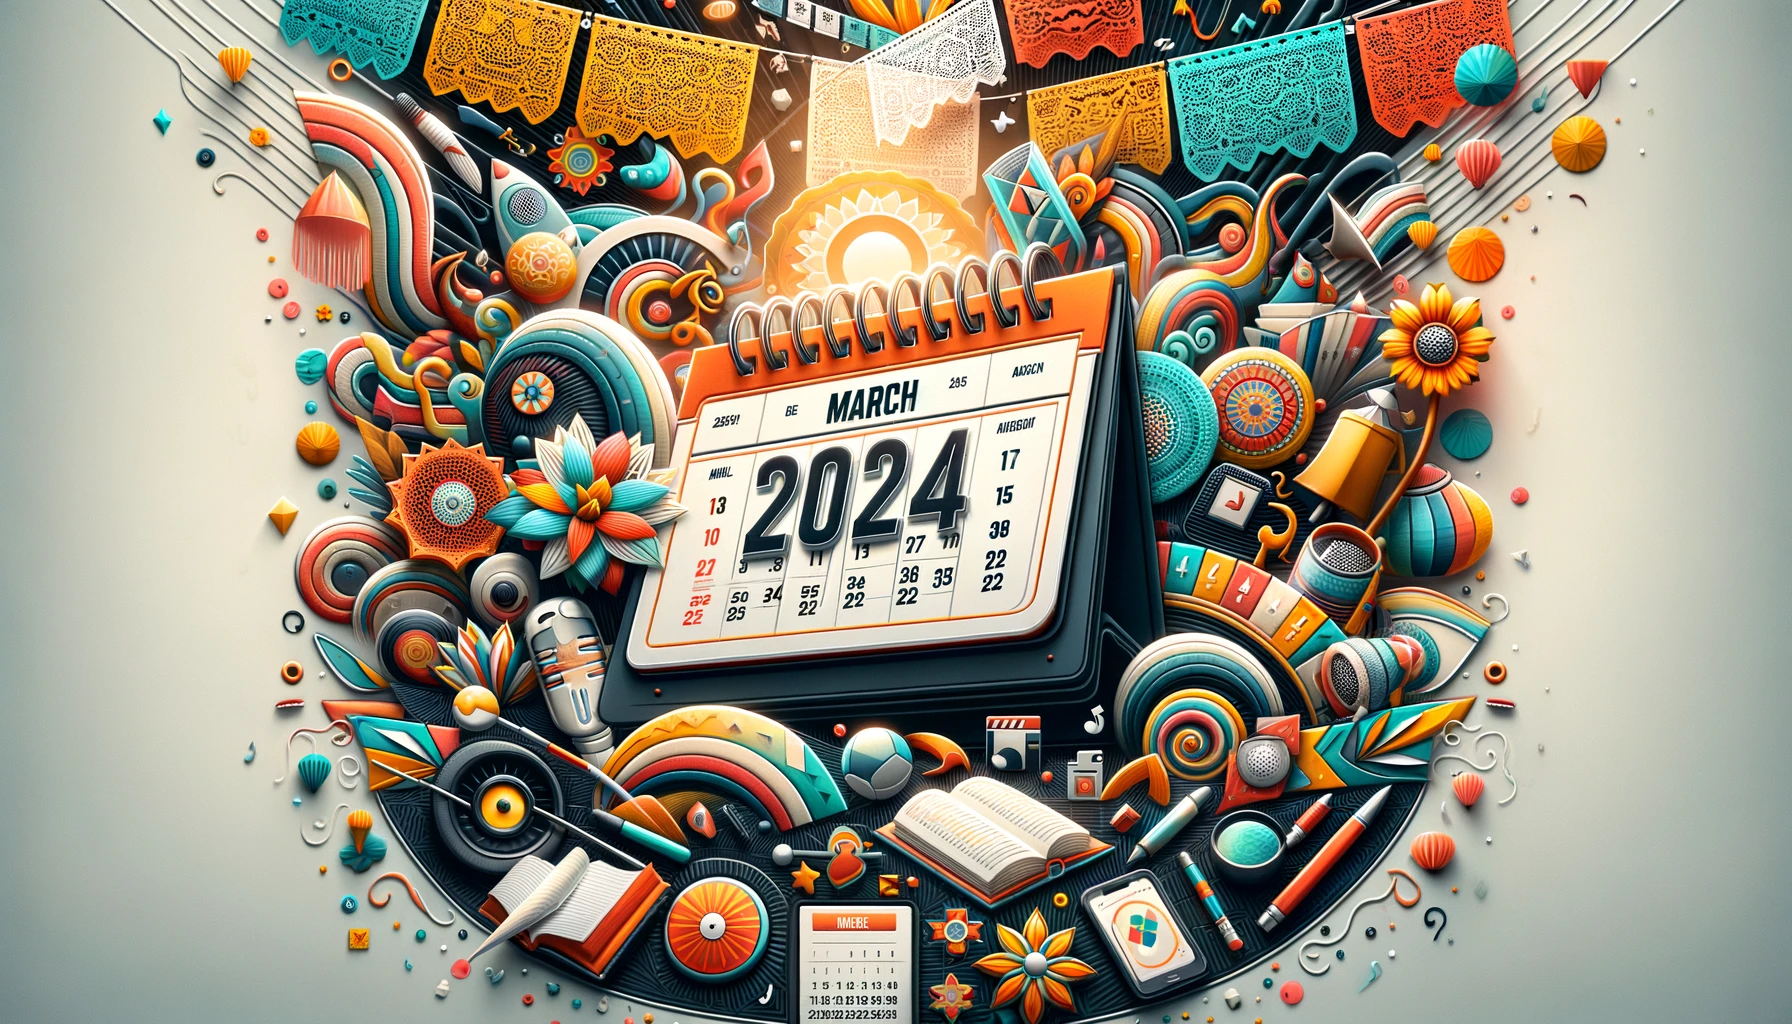 March 2024 Hispanic Marketing Content Calendar by LunaSol Media